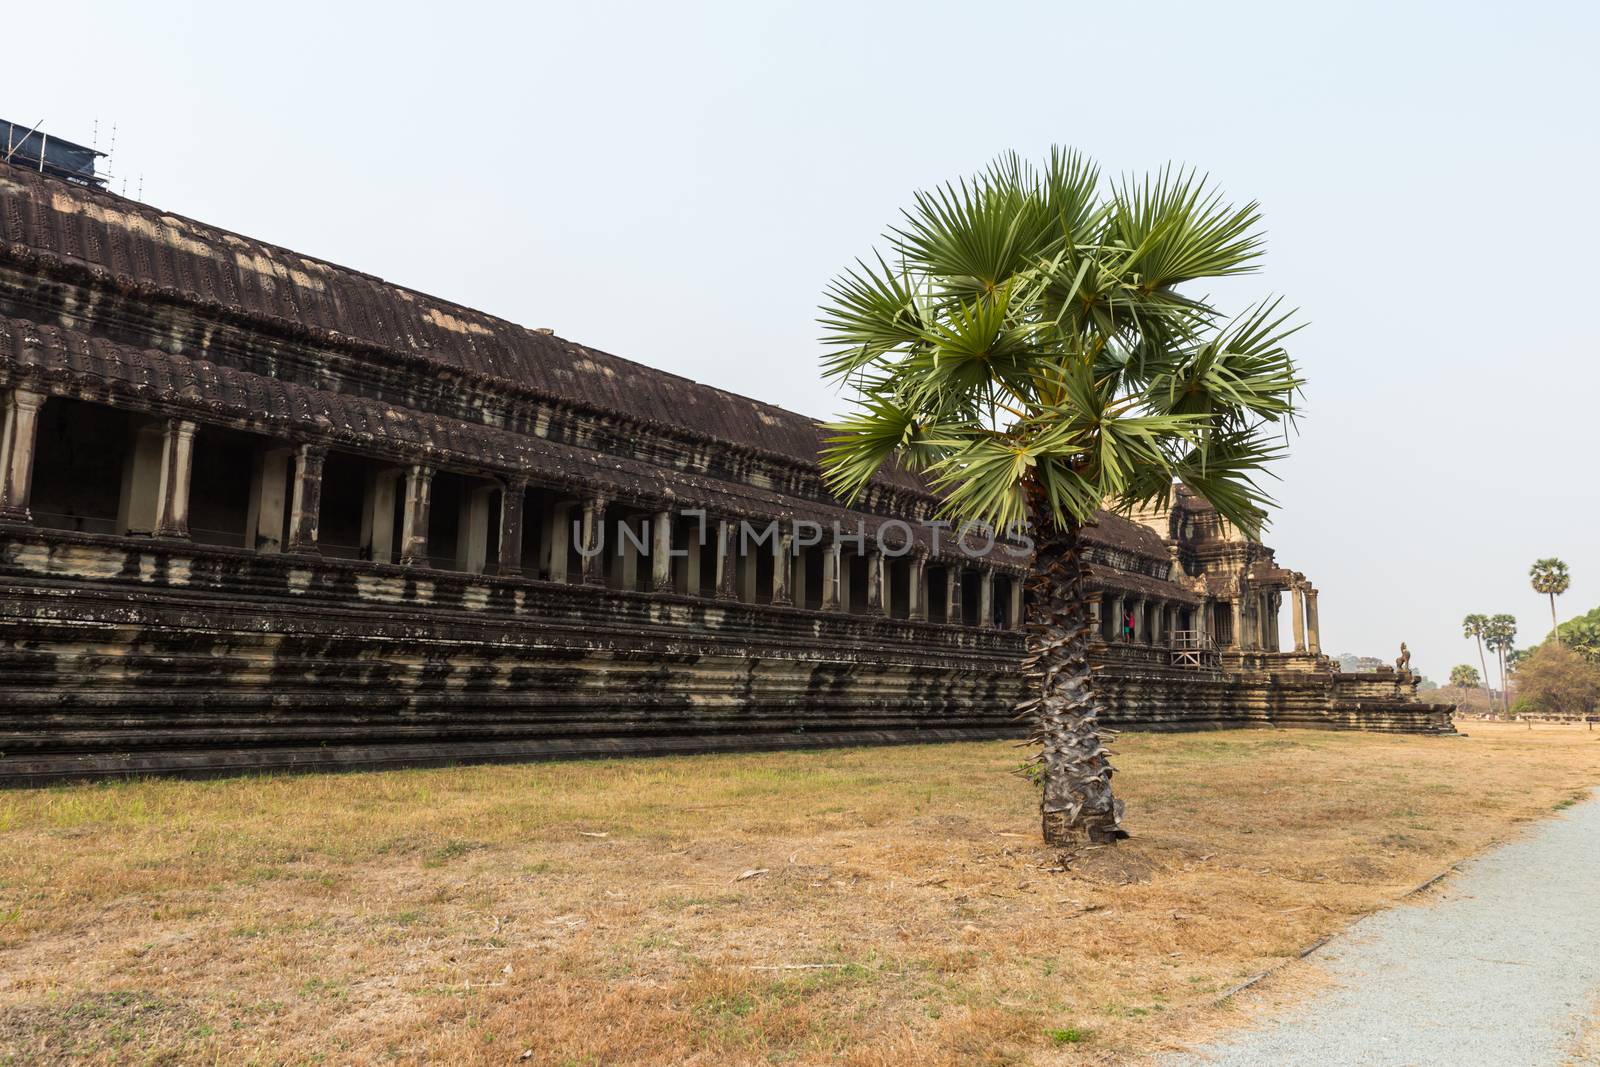 Angkor wat temple in Siem Reap Cambodia